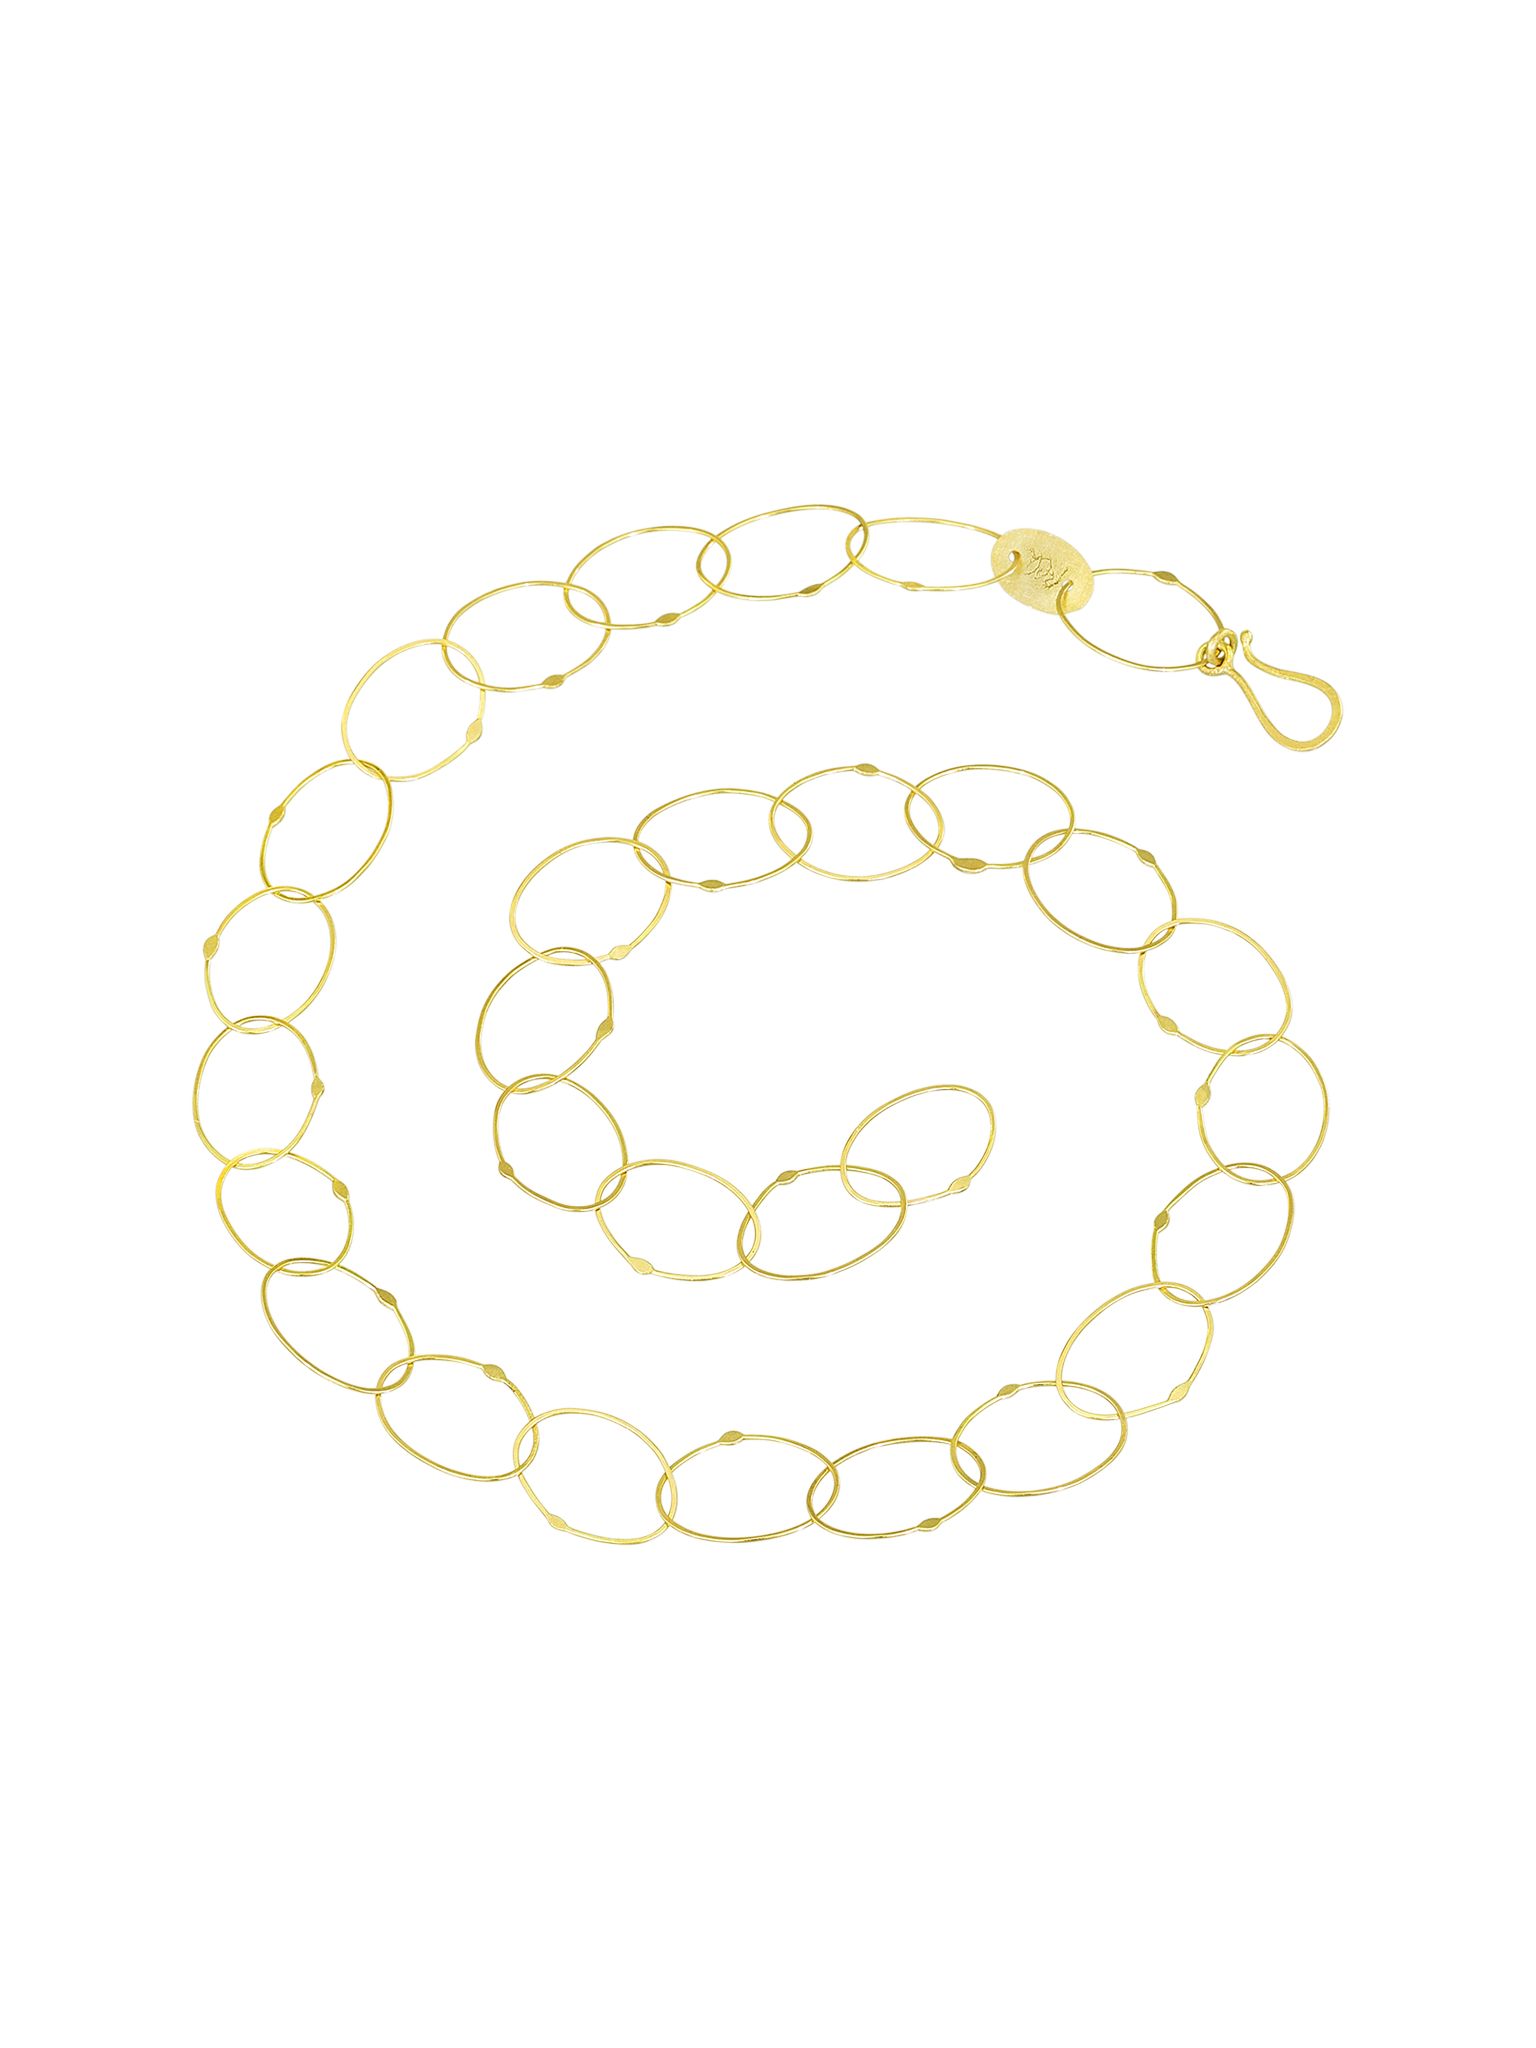 Oval link chain (big)